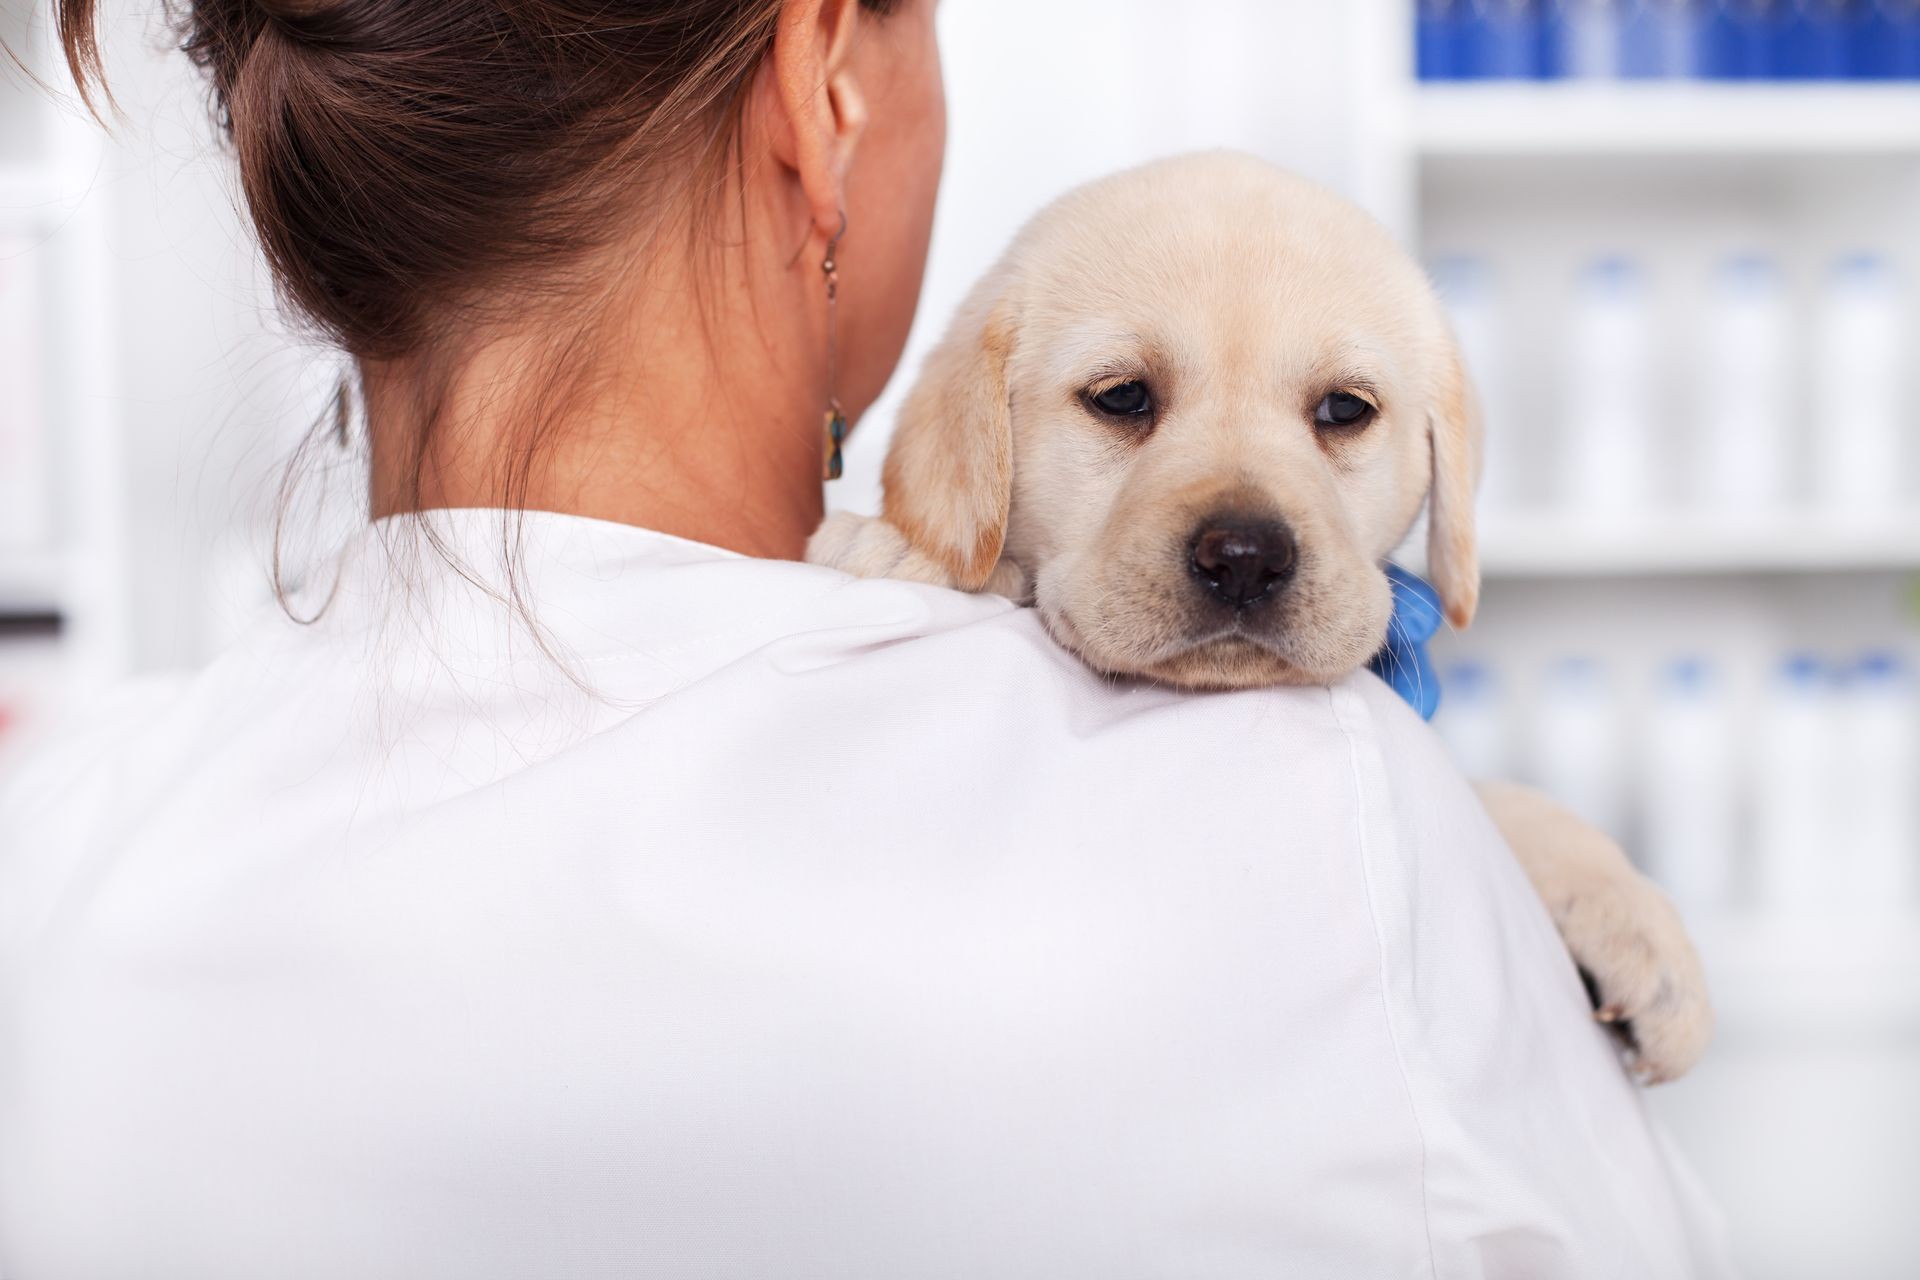 Lisa, Certified Veterinary Assistant (CVA)